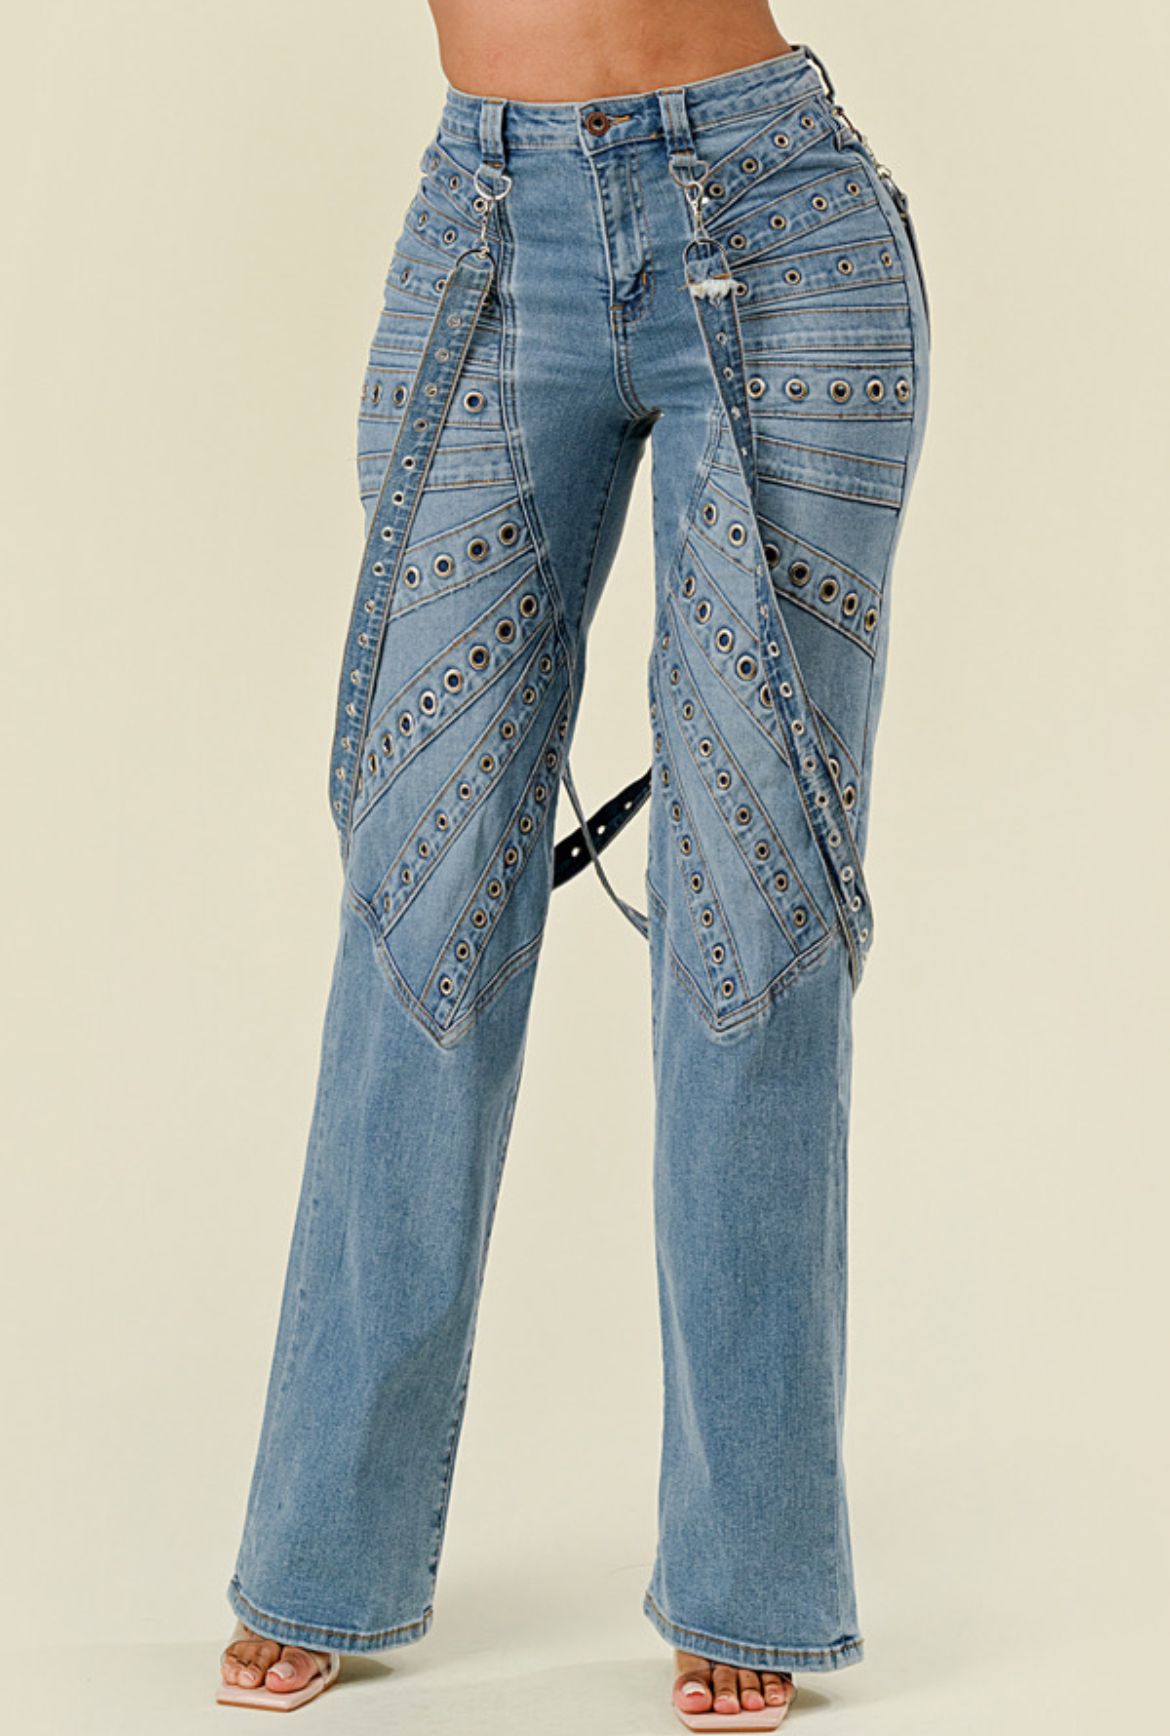 Grommet Denim Jeans